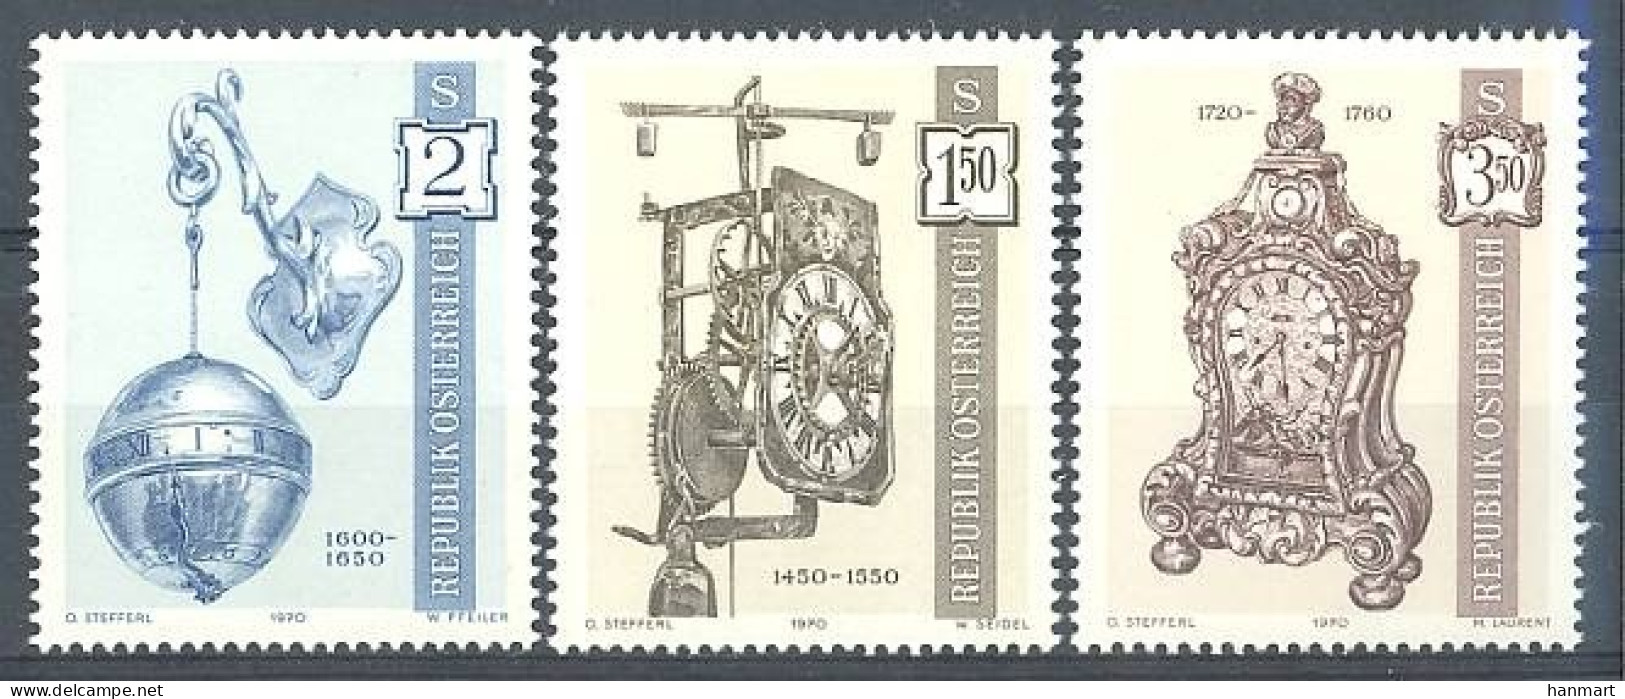 Austria 1970 Mi 1328-1330 MNH  (ZE1 AST1328-1330) - Uhrmacherei